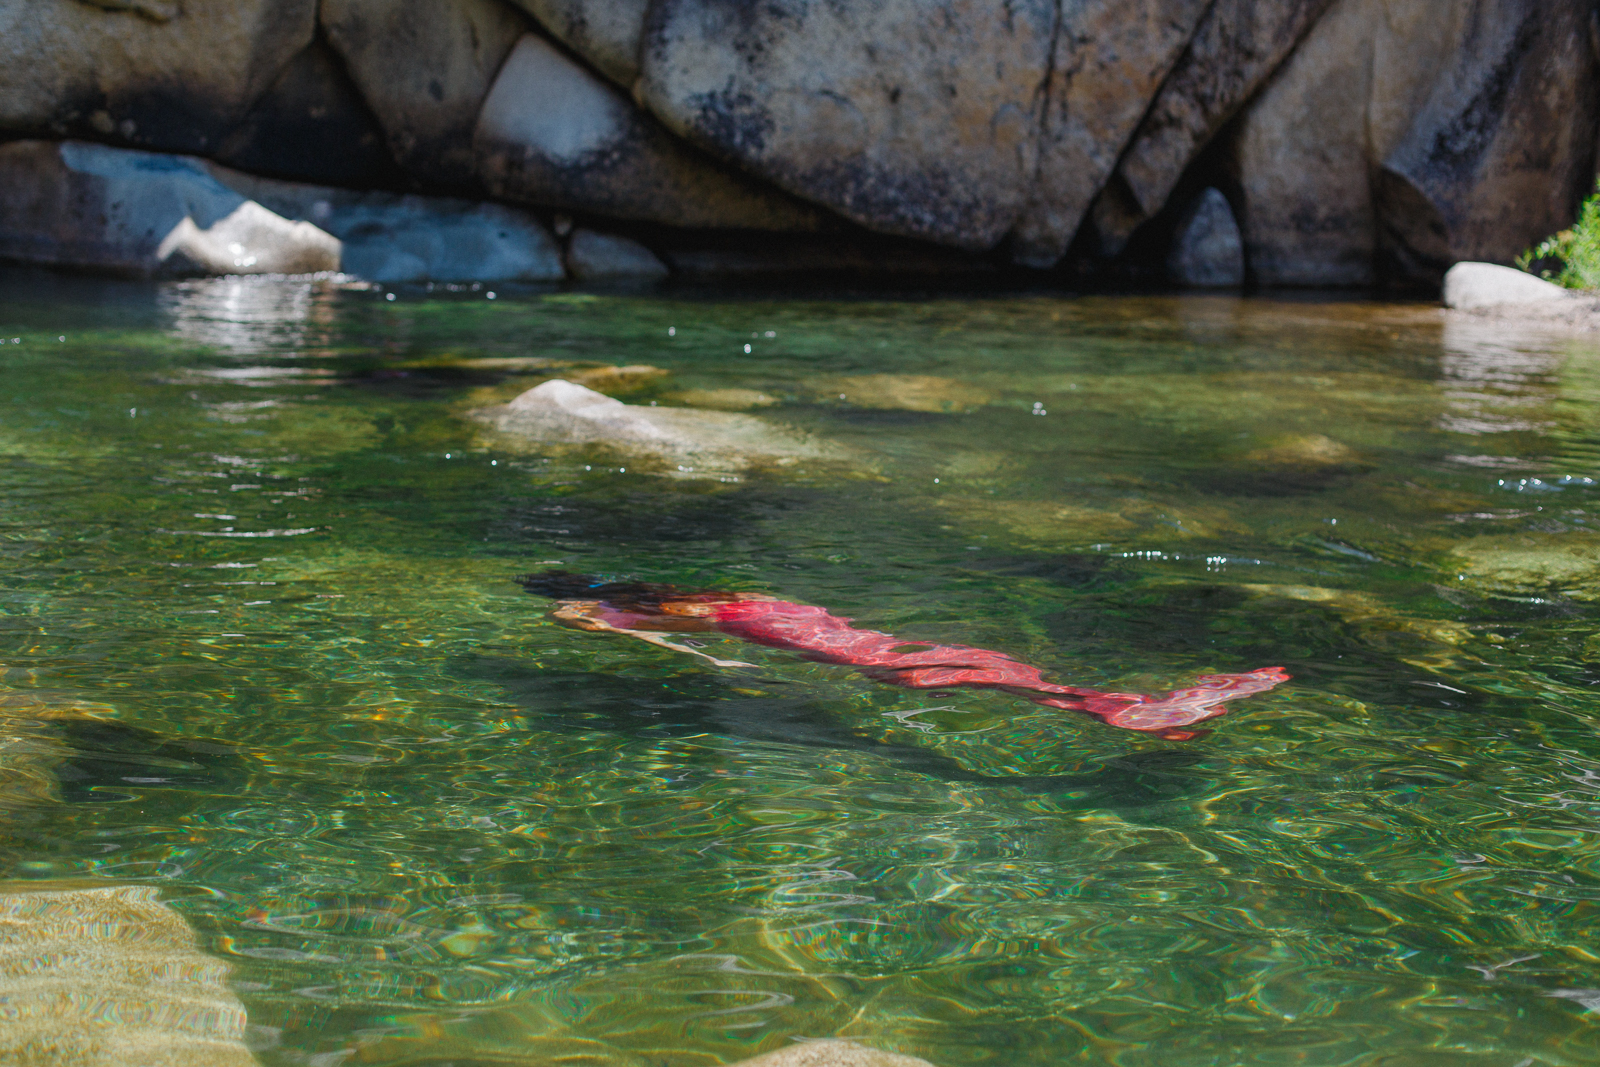 Mermaid underwater in the Yuba River outside Nevada City, California